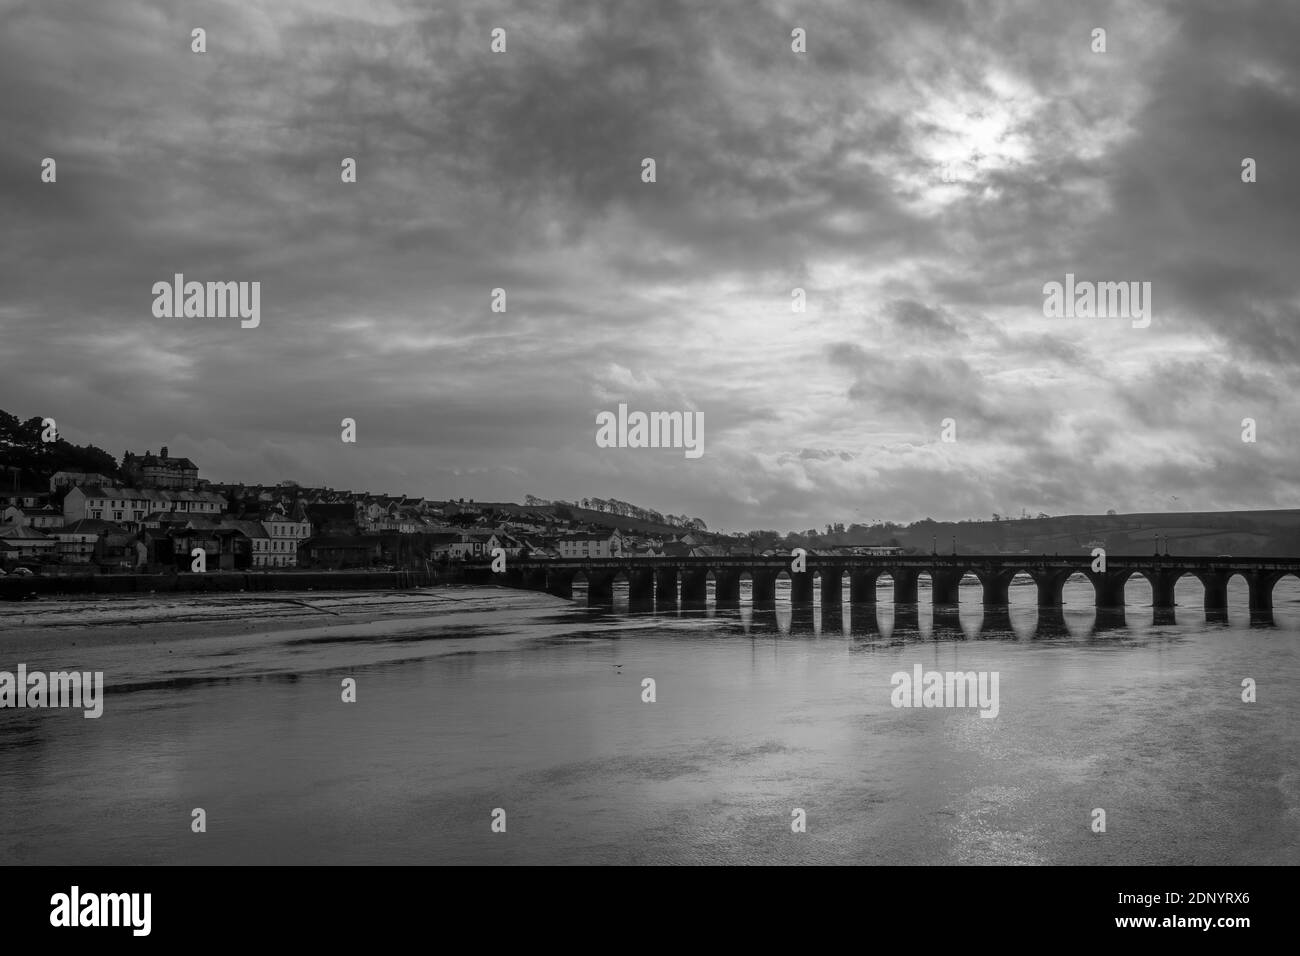 Bideford, on the River Torridge in North Devon, on a bad weather, rainy day in winter. Monochrome. Stock Photo